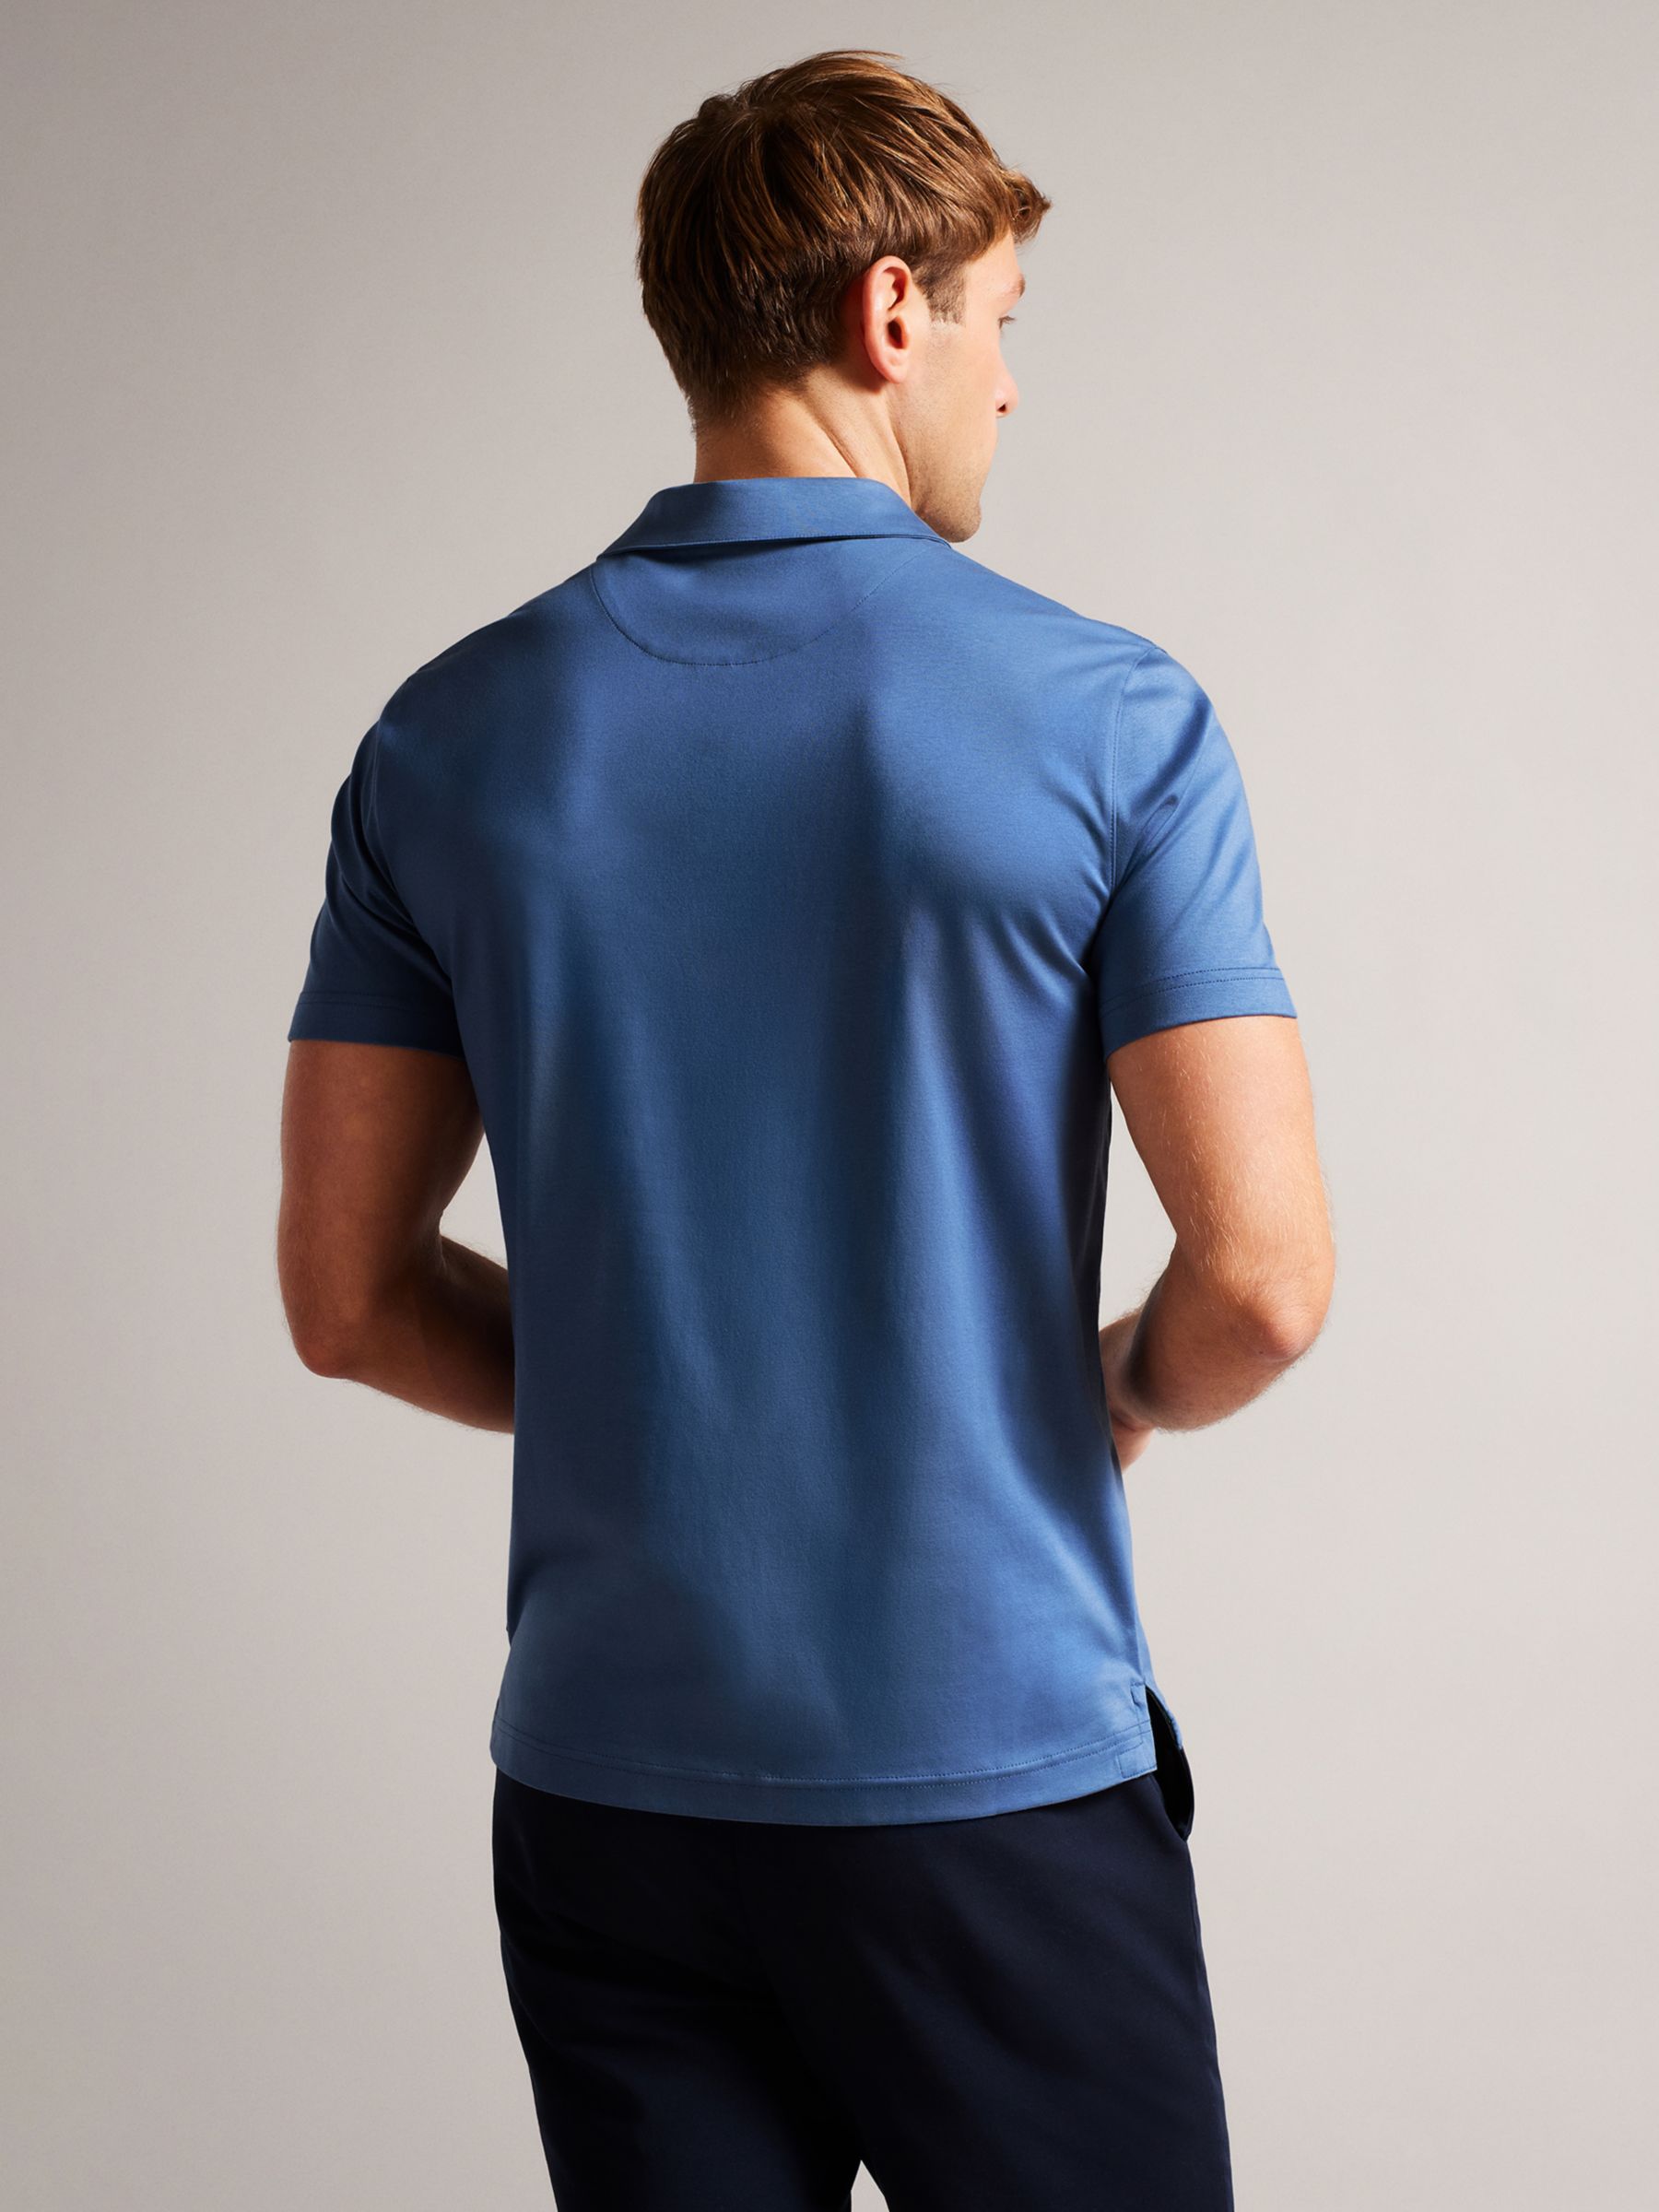 Ted Baker Zeiter Slim Fit Polo Shirt, Dark Blue at John Lewis & Partners